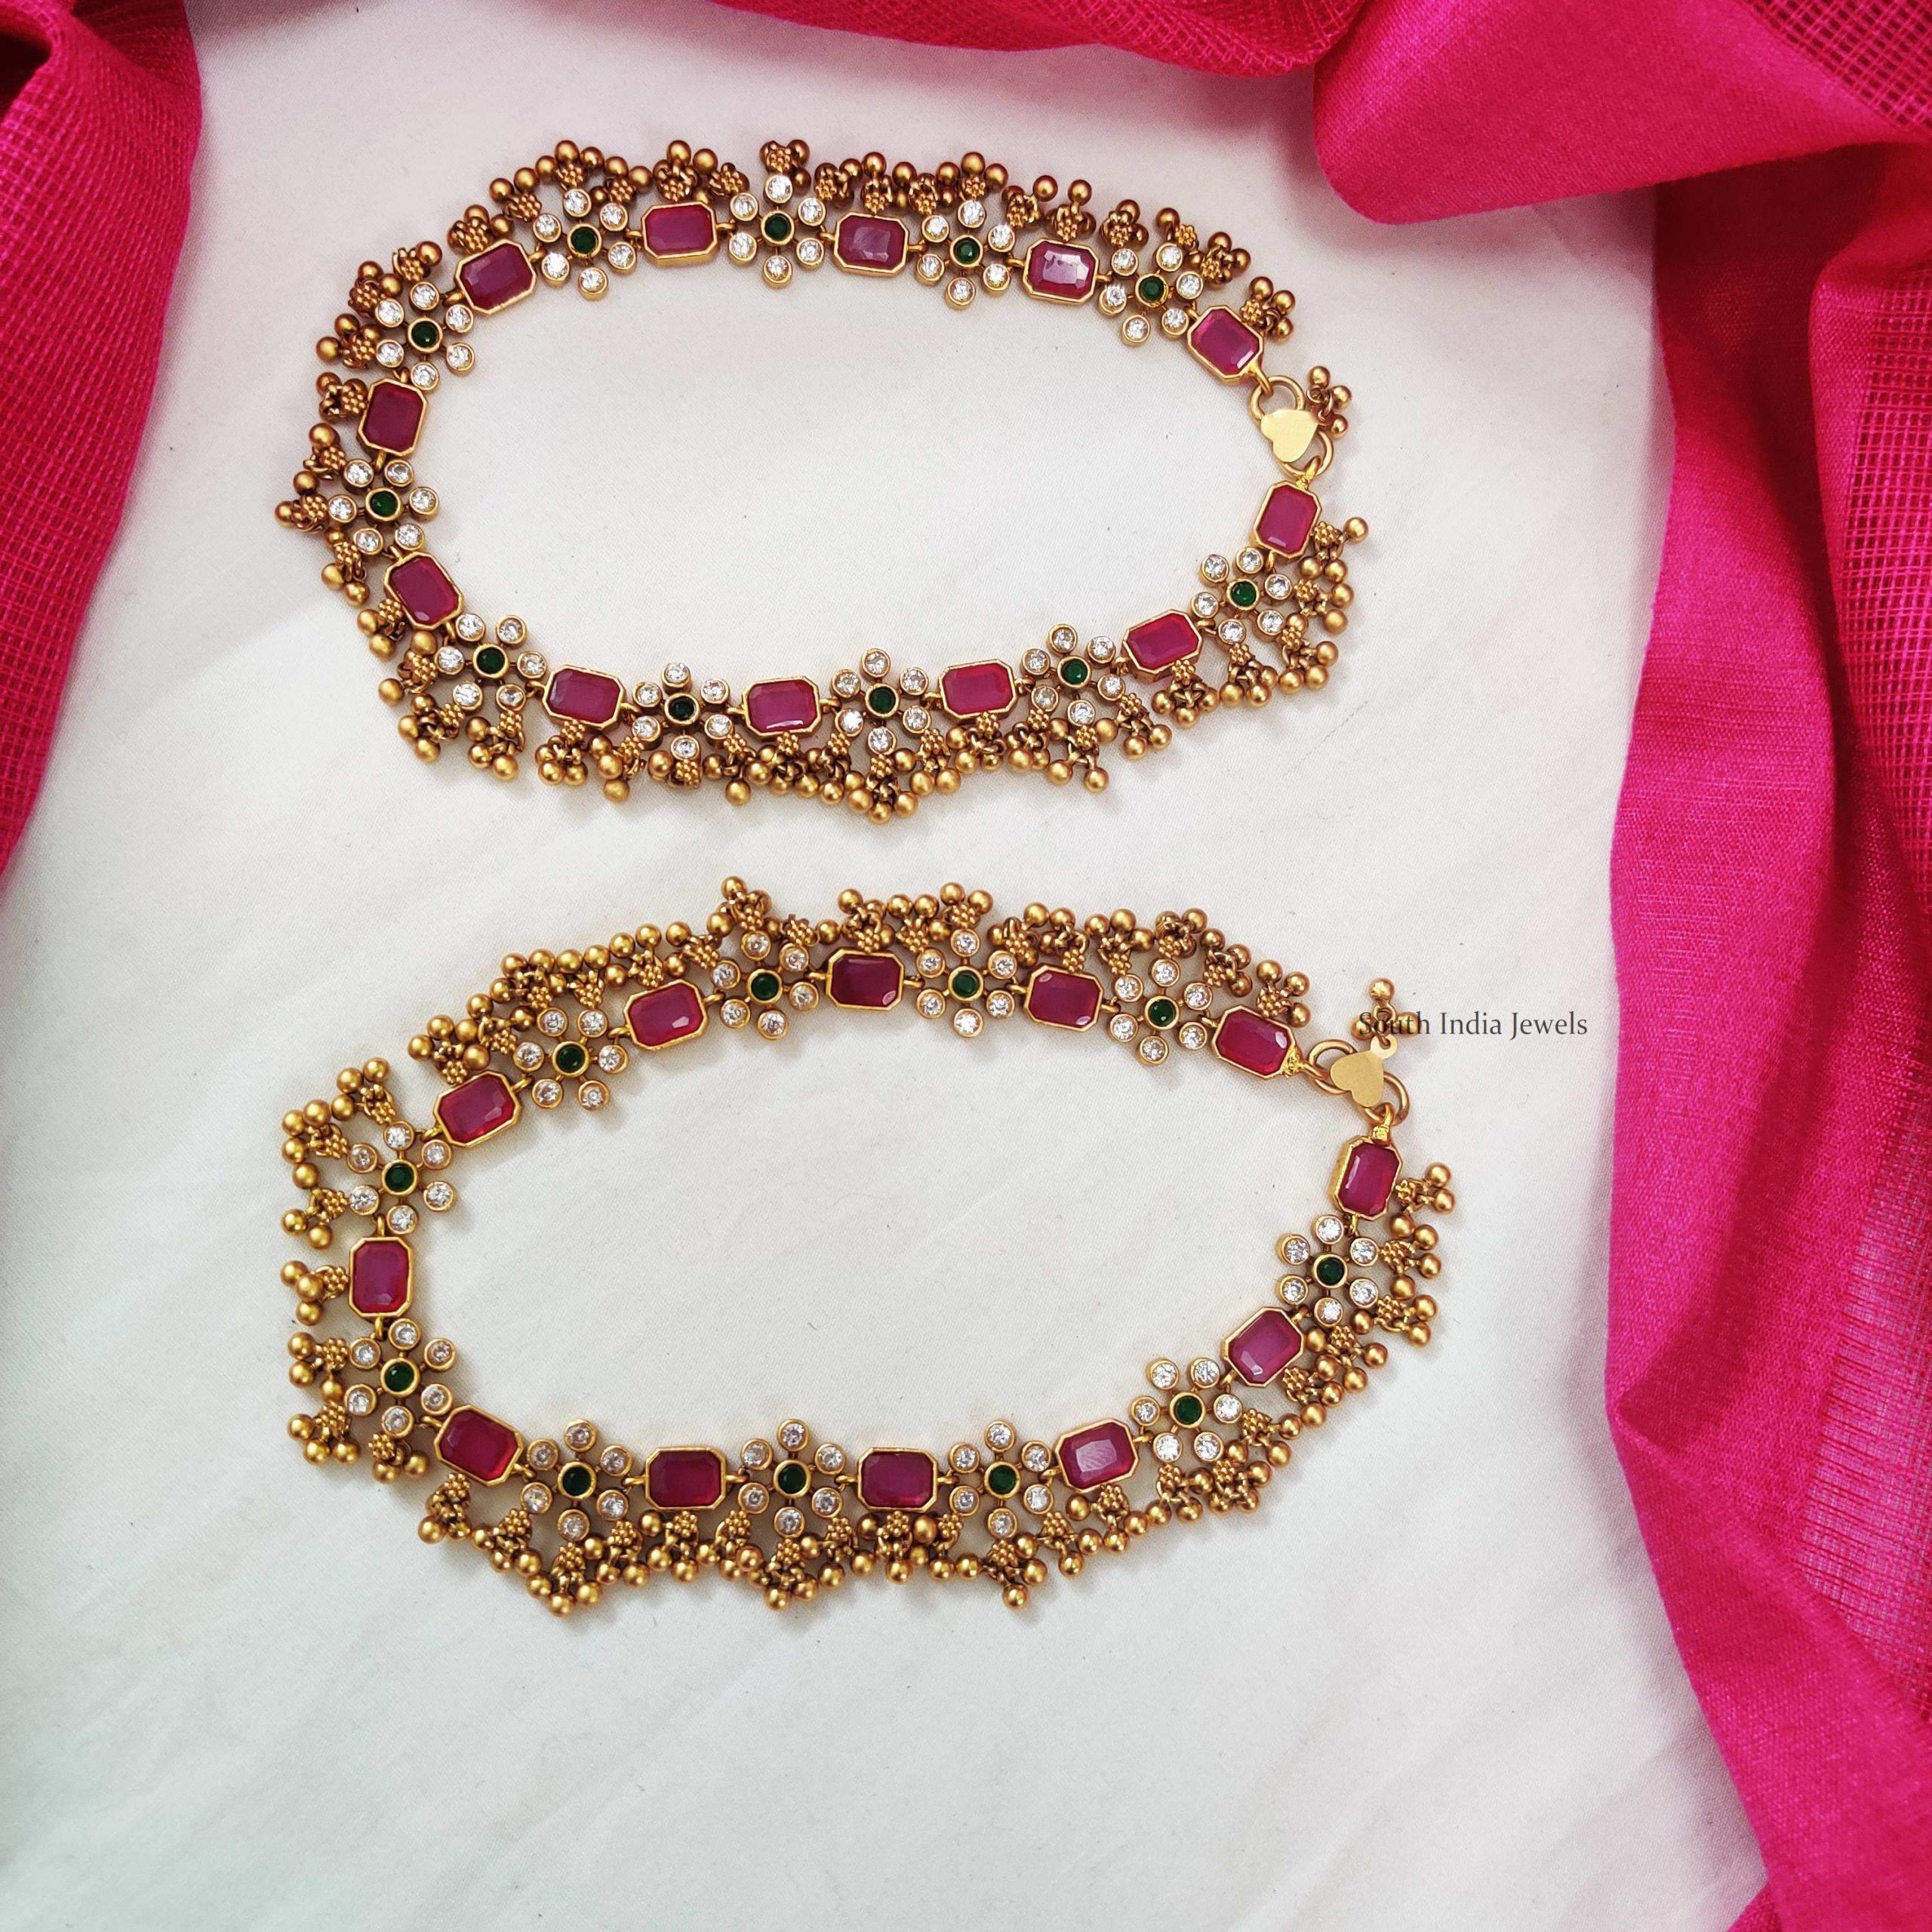 Bridal Flower Design Anklets | Unique Anklets - South India Jewels